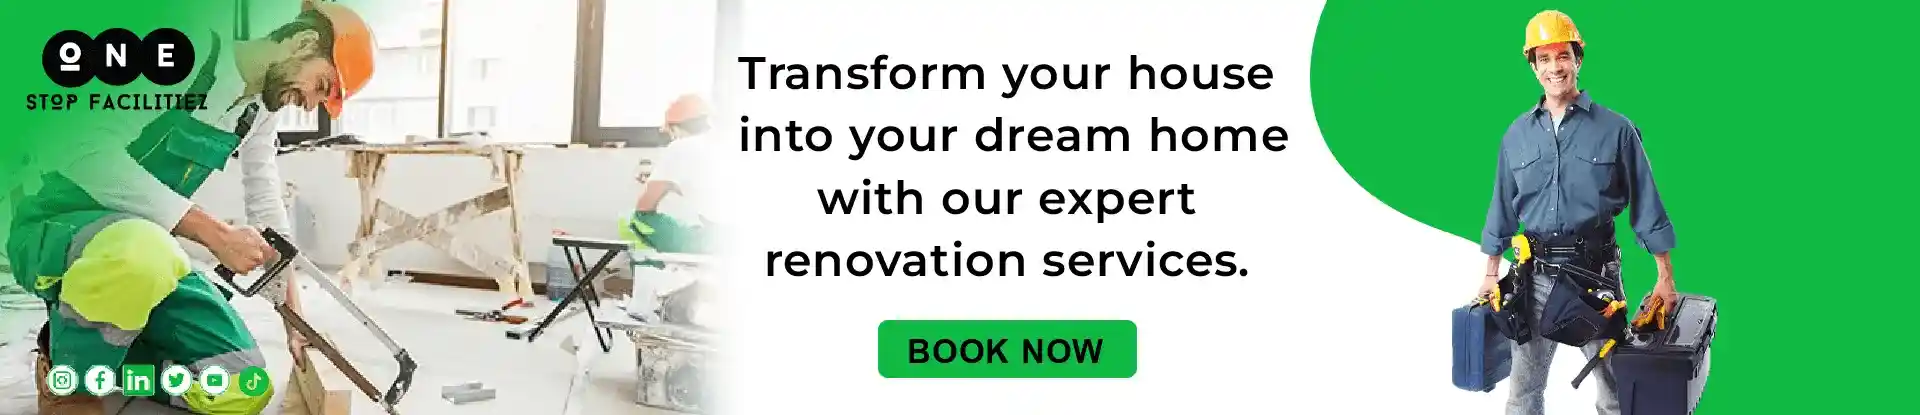 Home Renovation service Image